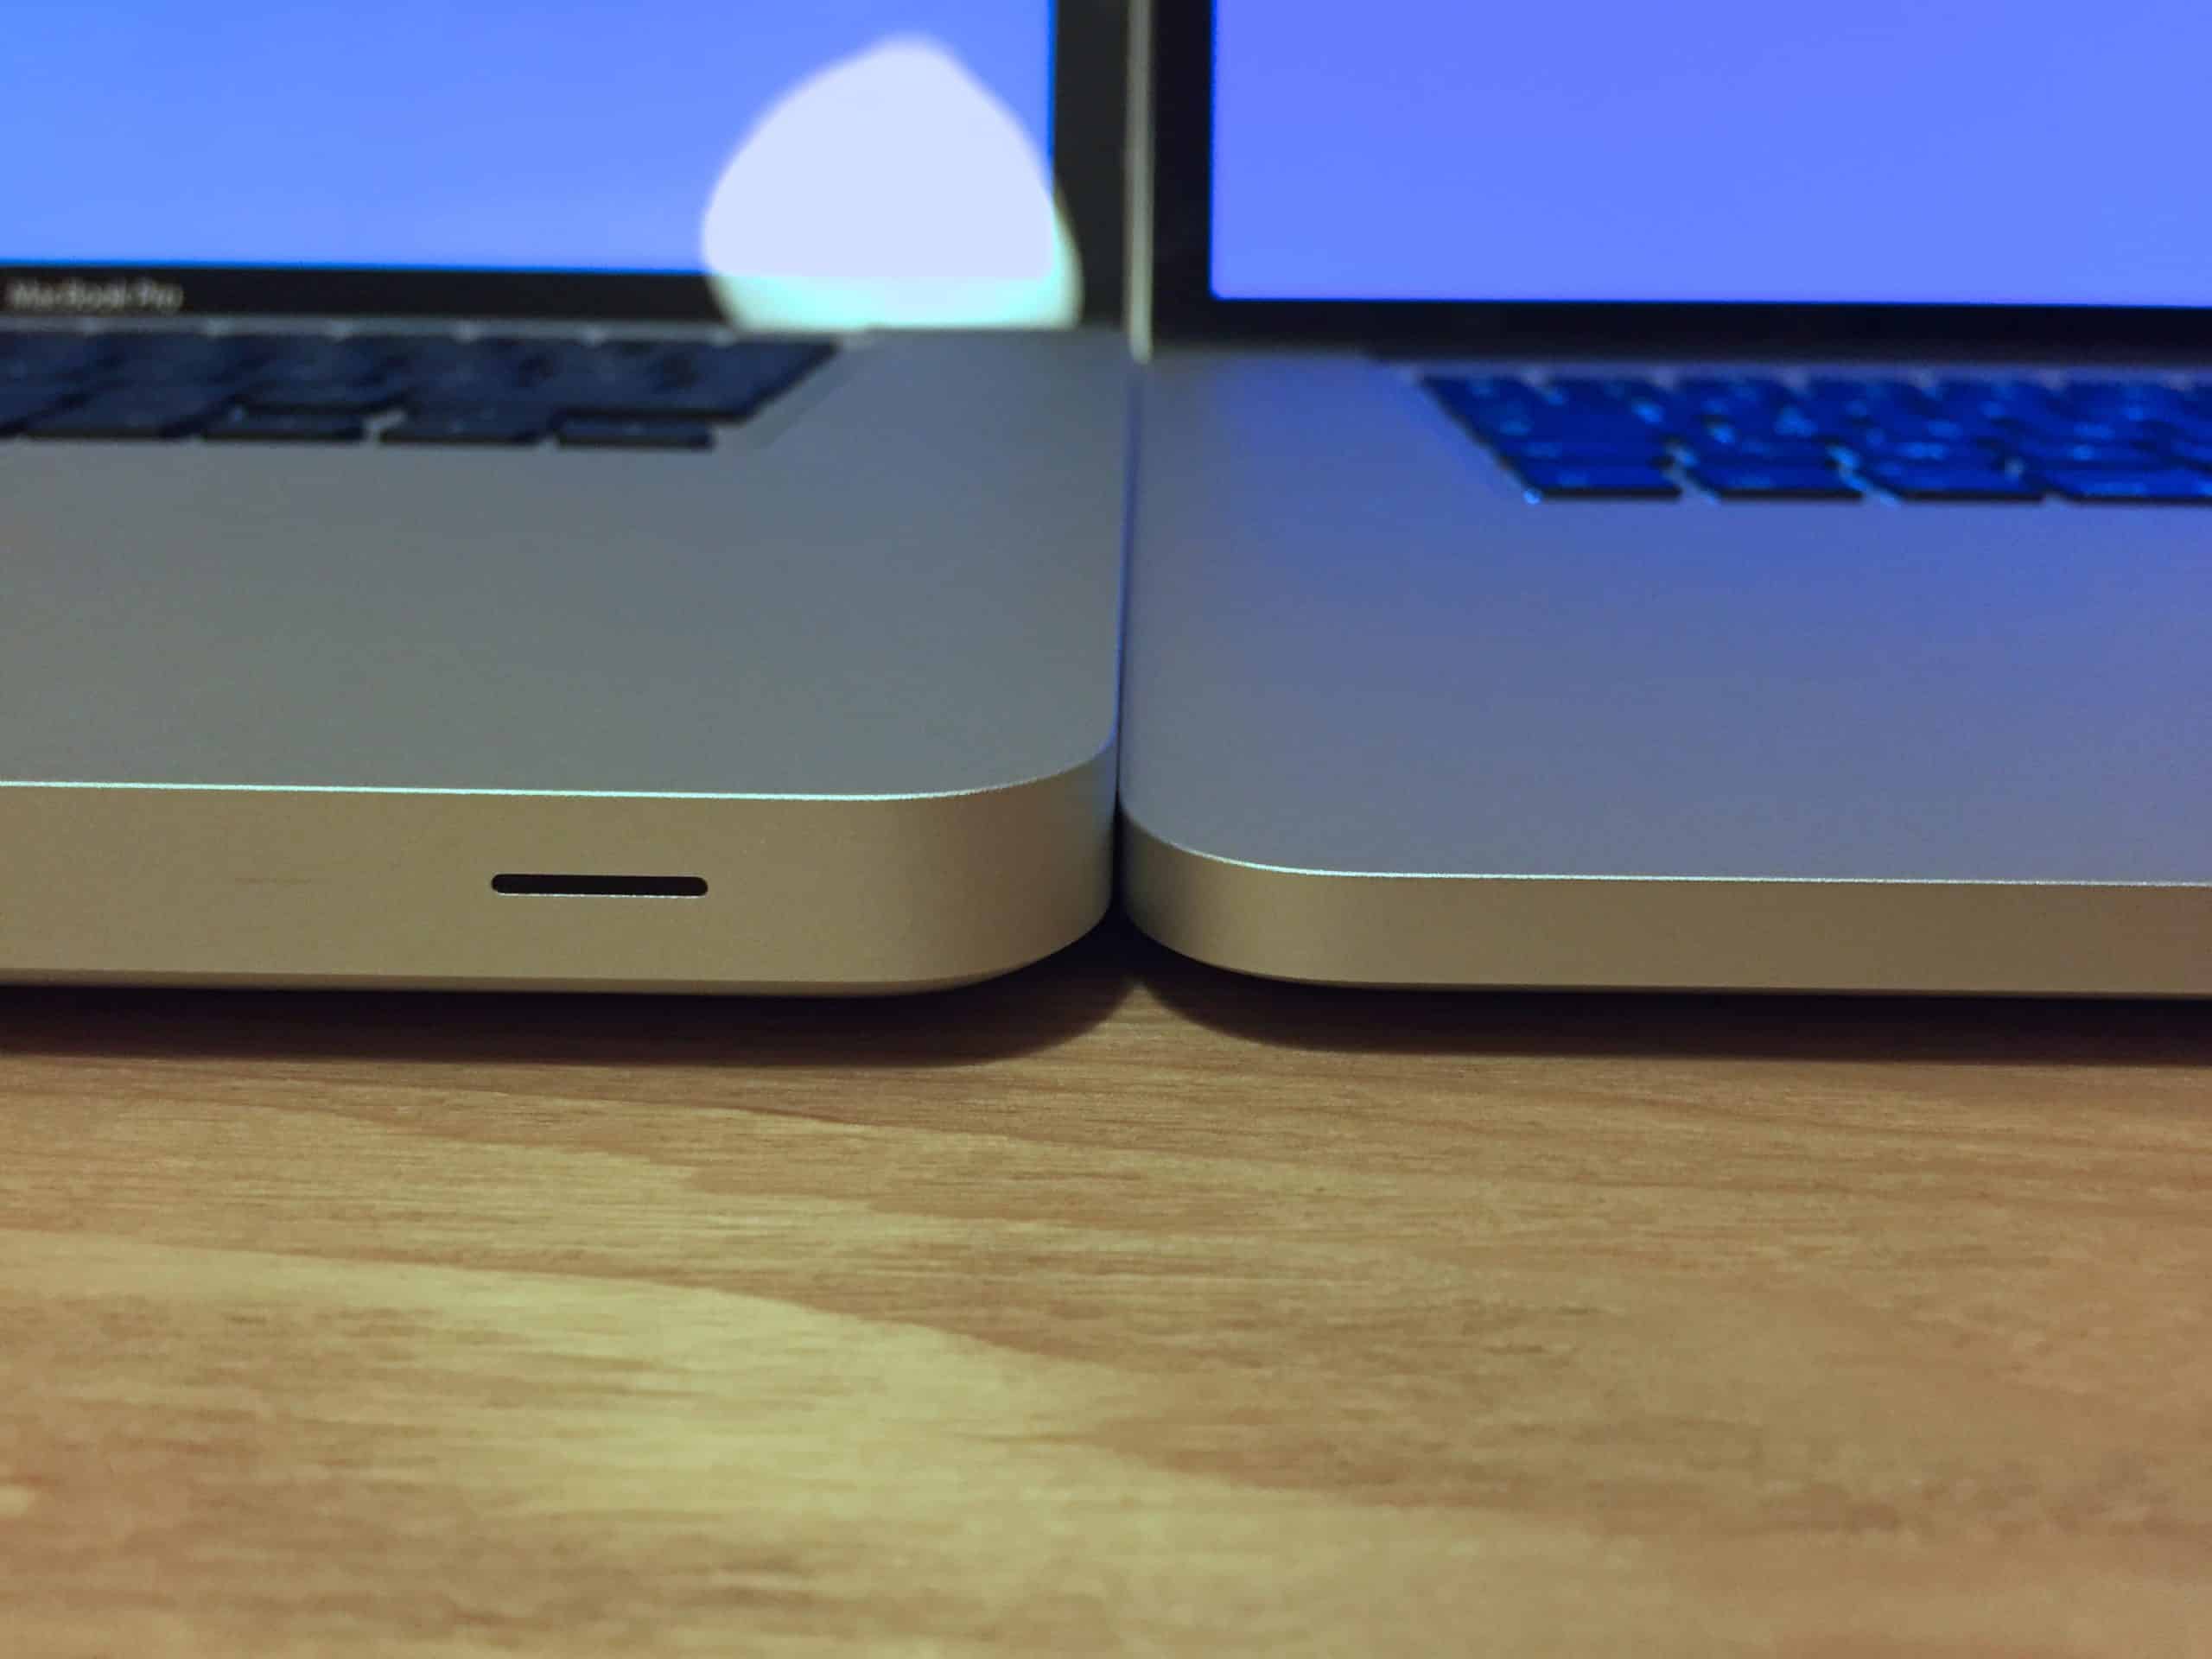 Difference macbook pro macbook pro retina00007